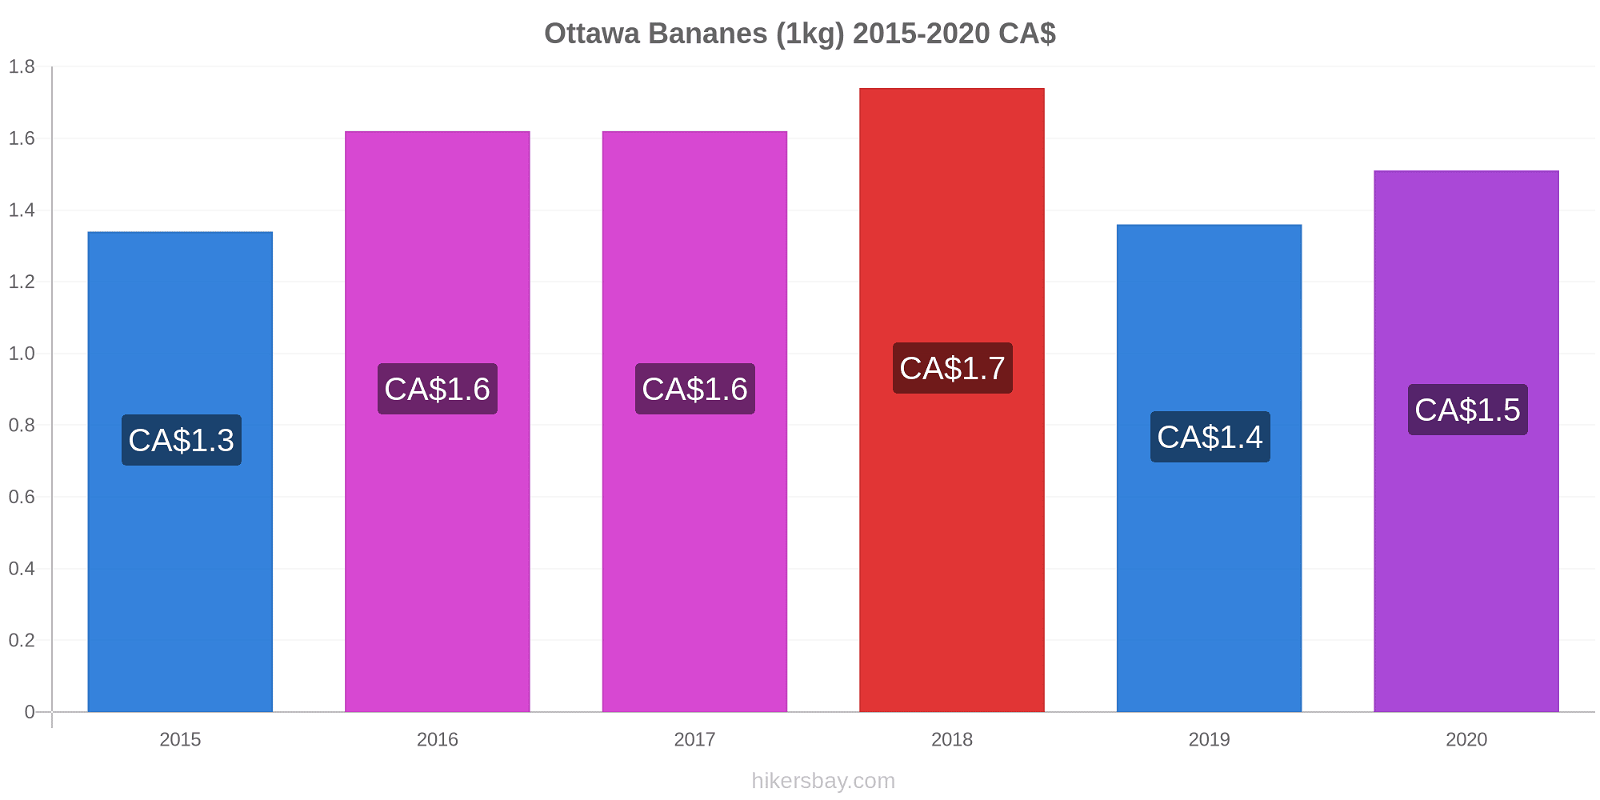 Ottawa changements de prix Bananes (1kg) hikersbay.com